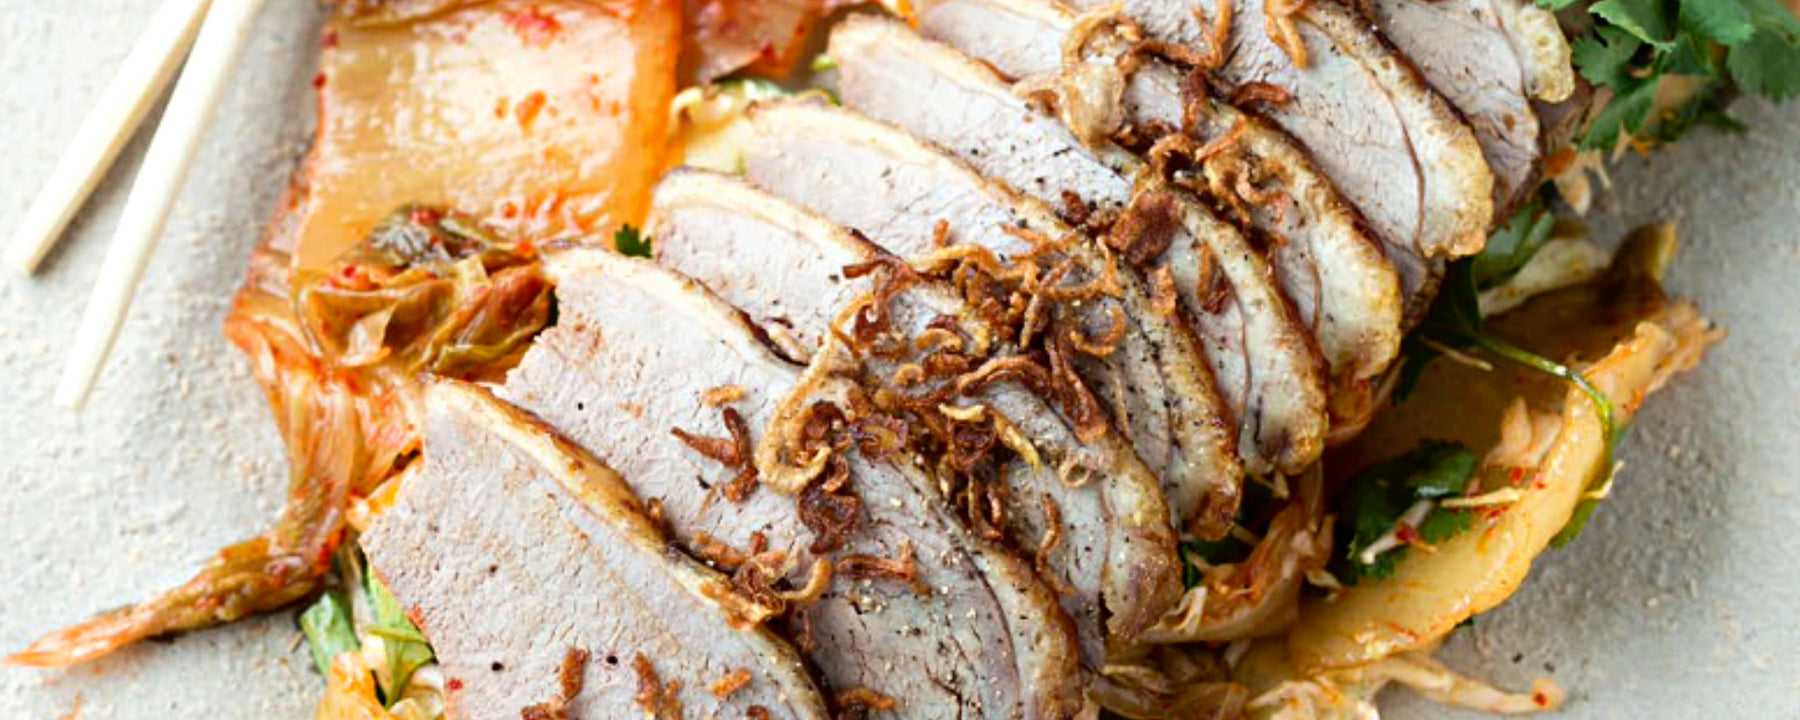 Canard laqué et salade au kimchi||Peking duck and kimchi salad